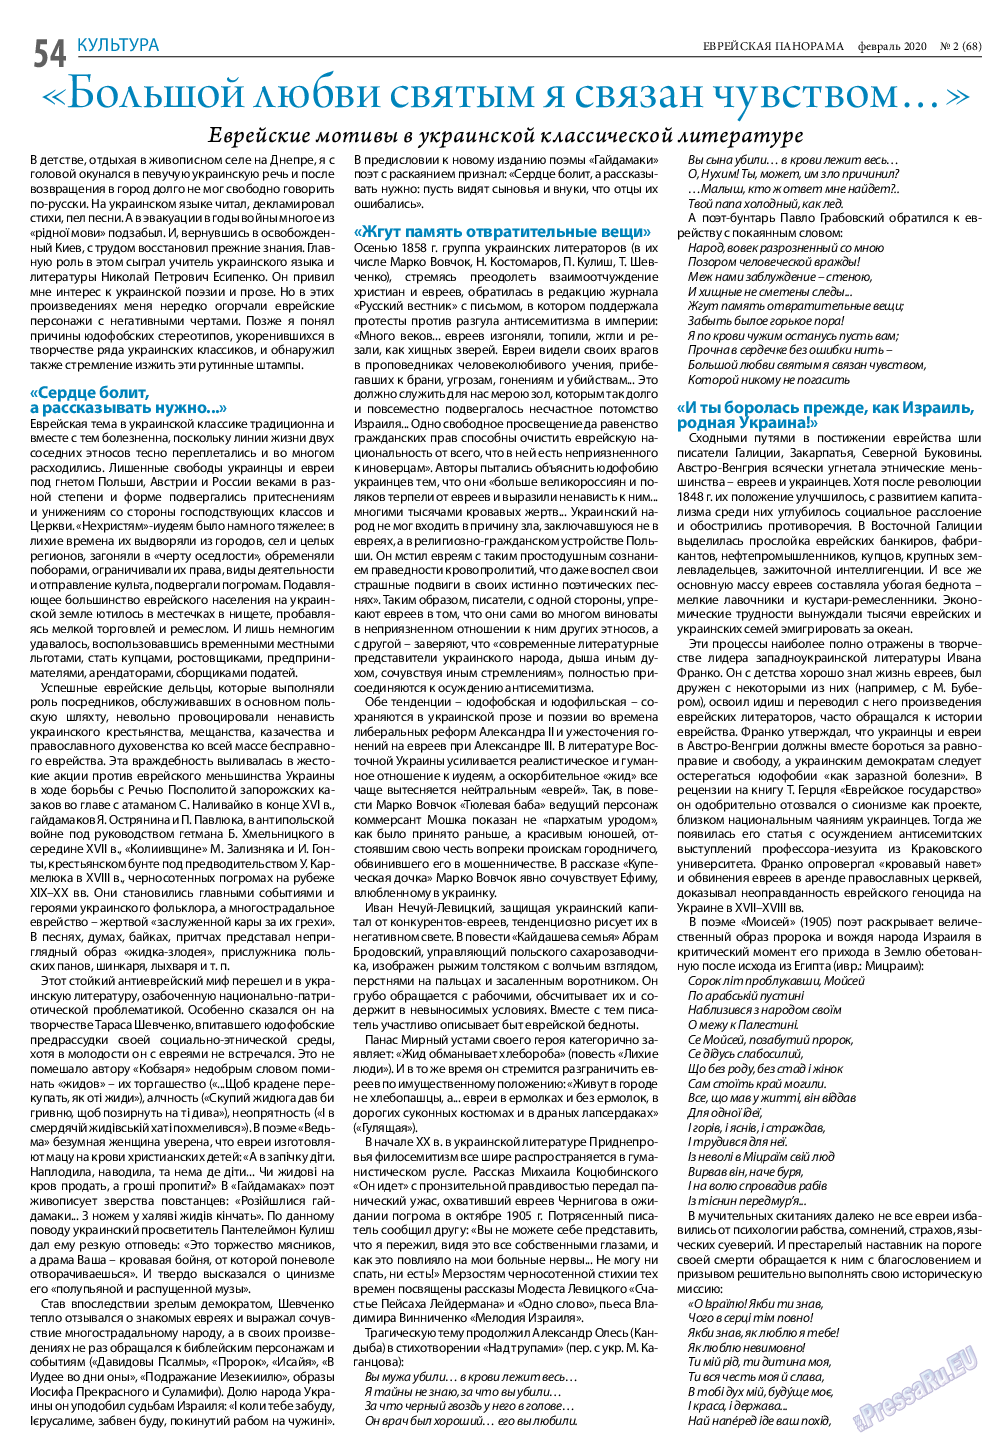 Еврейская панорама, газета. 2020 №2 стр.54